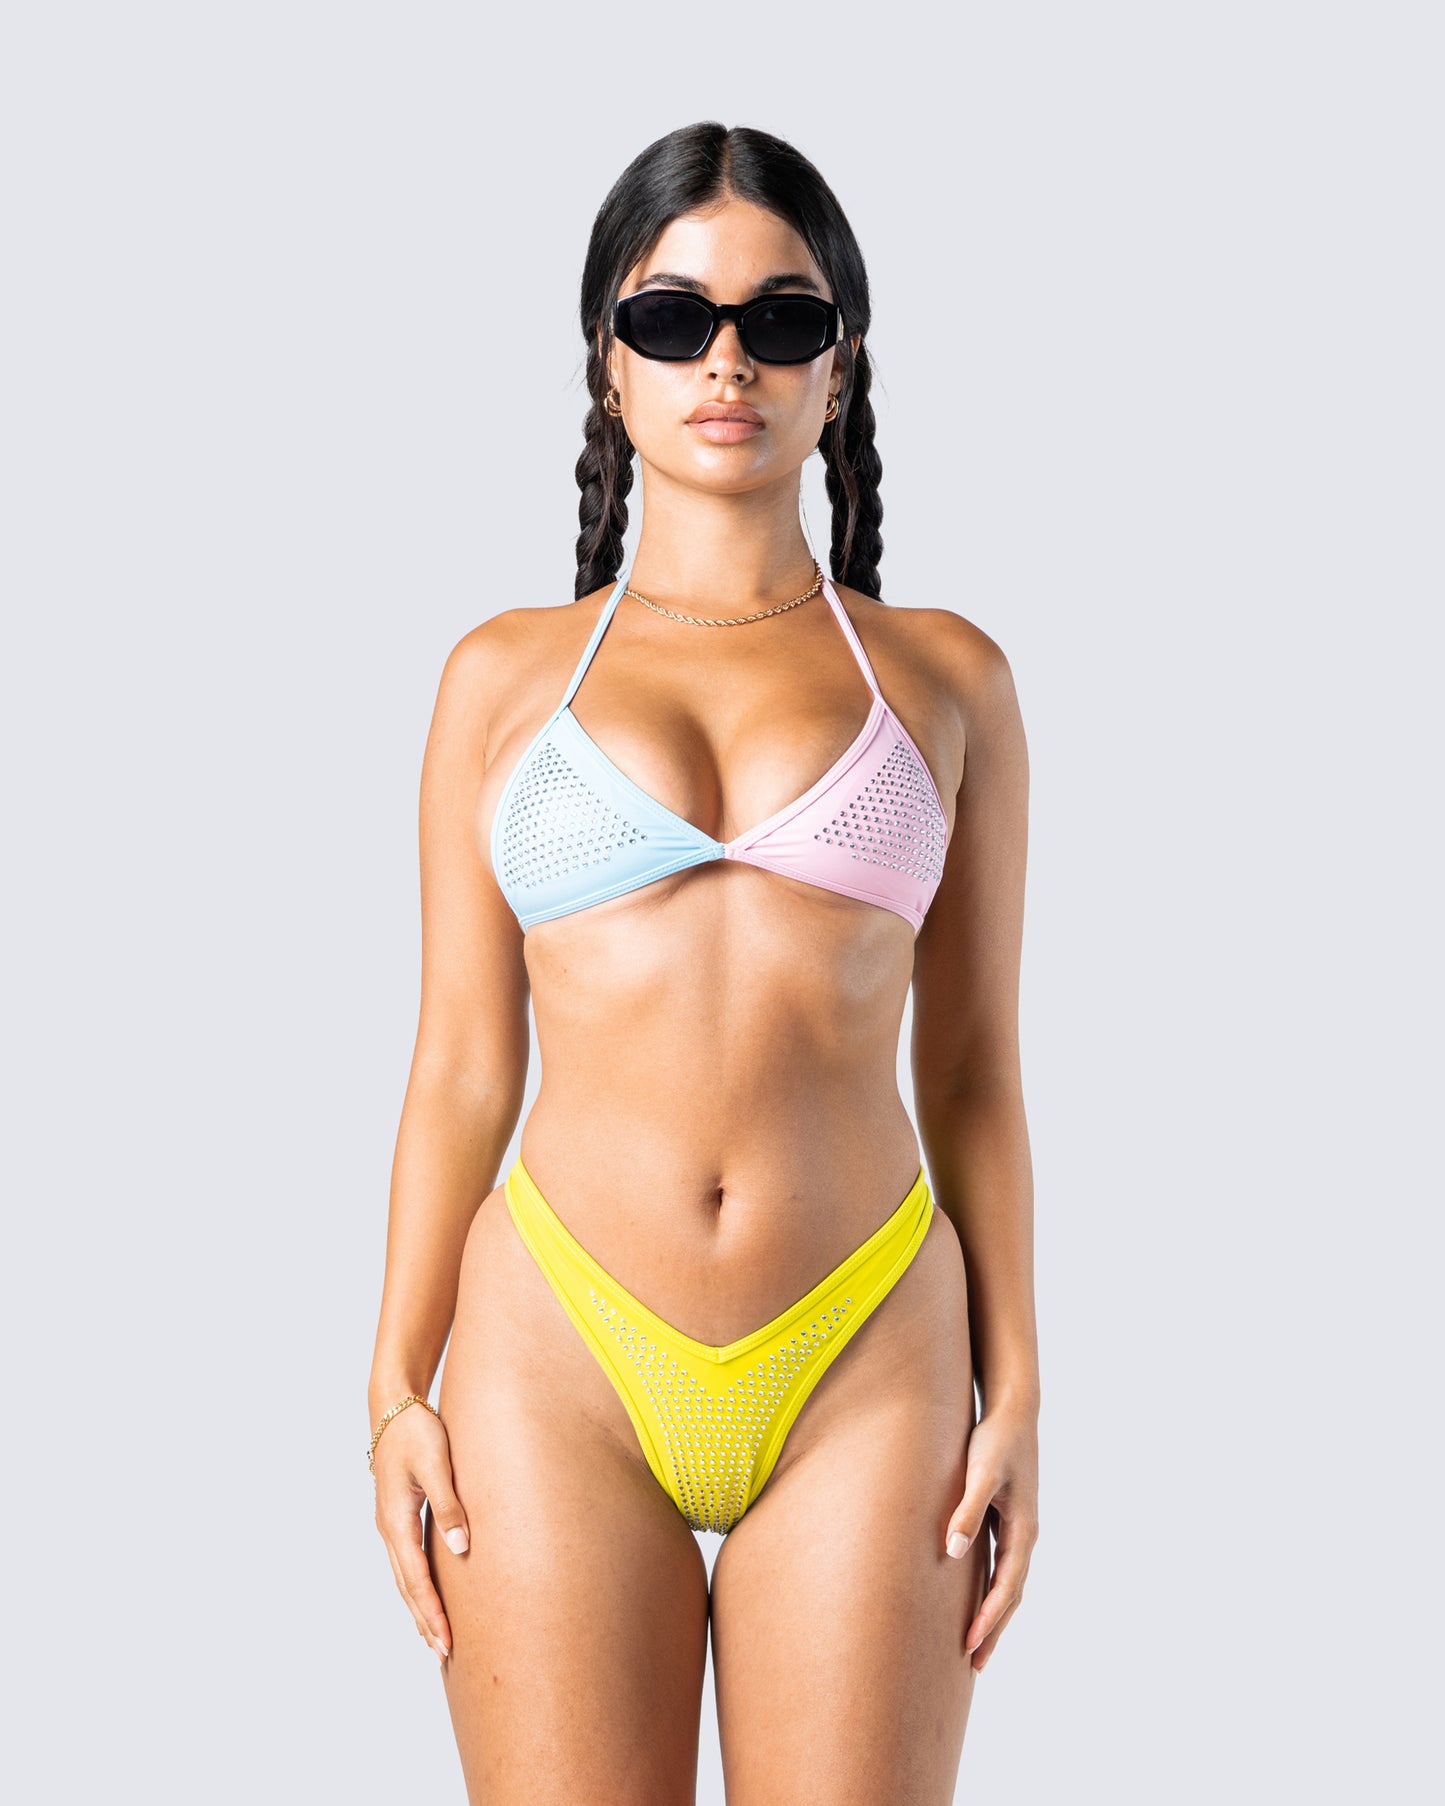 Ashley Rhinestone Bikini Top